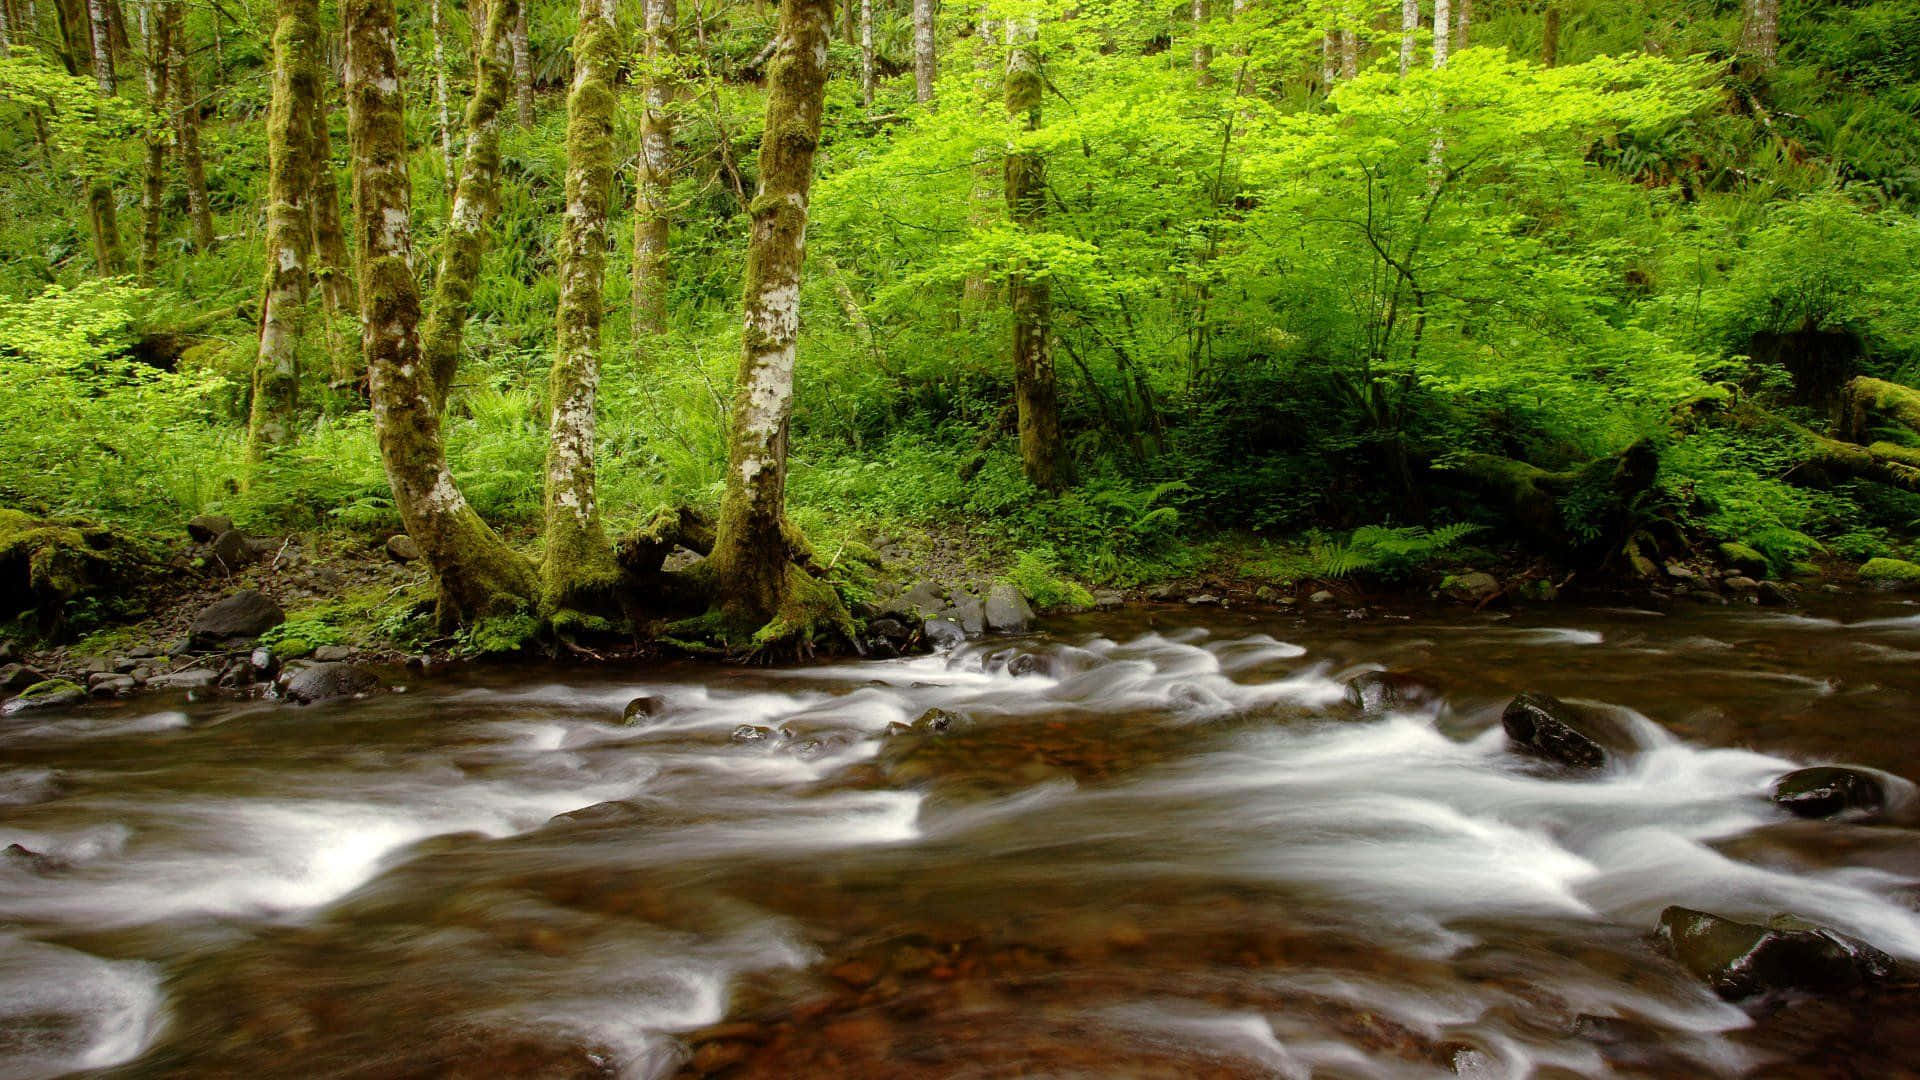 Enjoy a peaceful walk near a babbling creek.